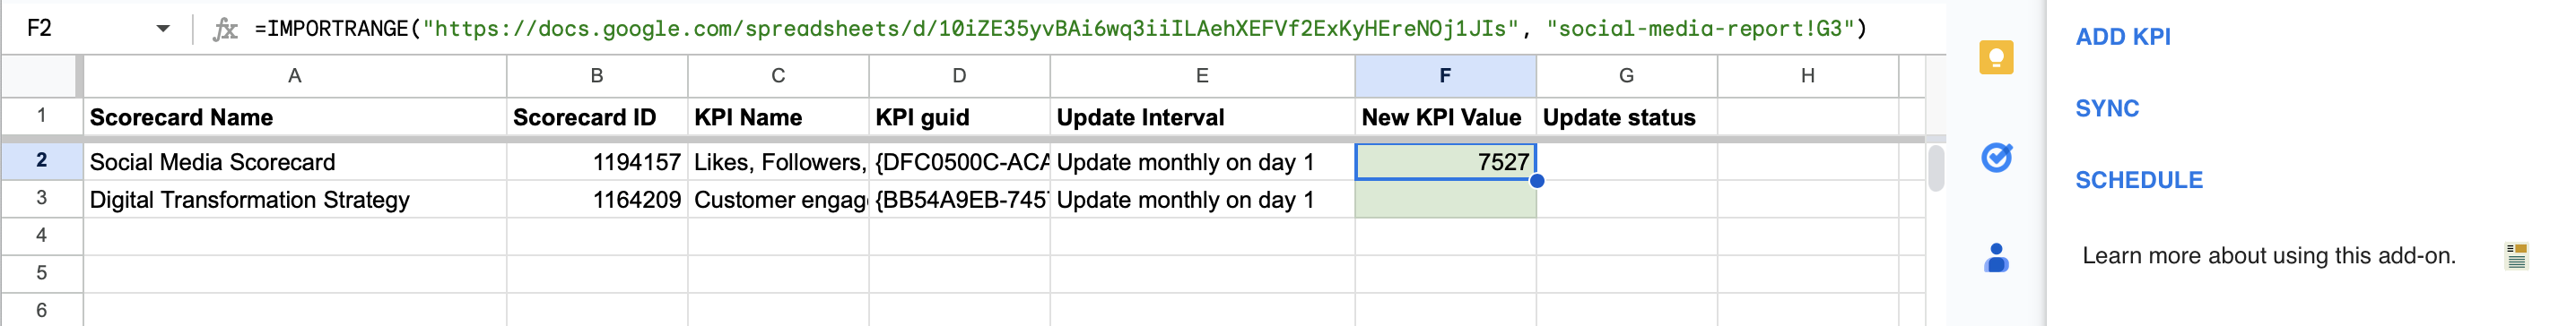 Using IMPORTRANGE formulate to enter aggregated data into the KPI